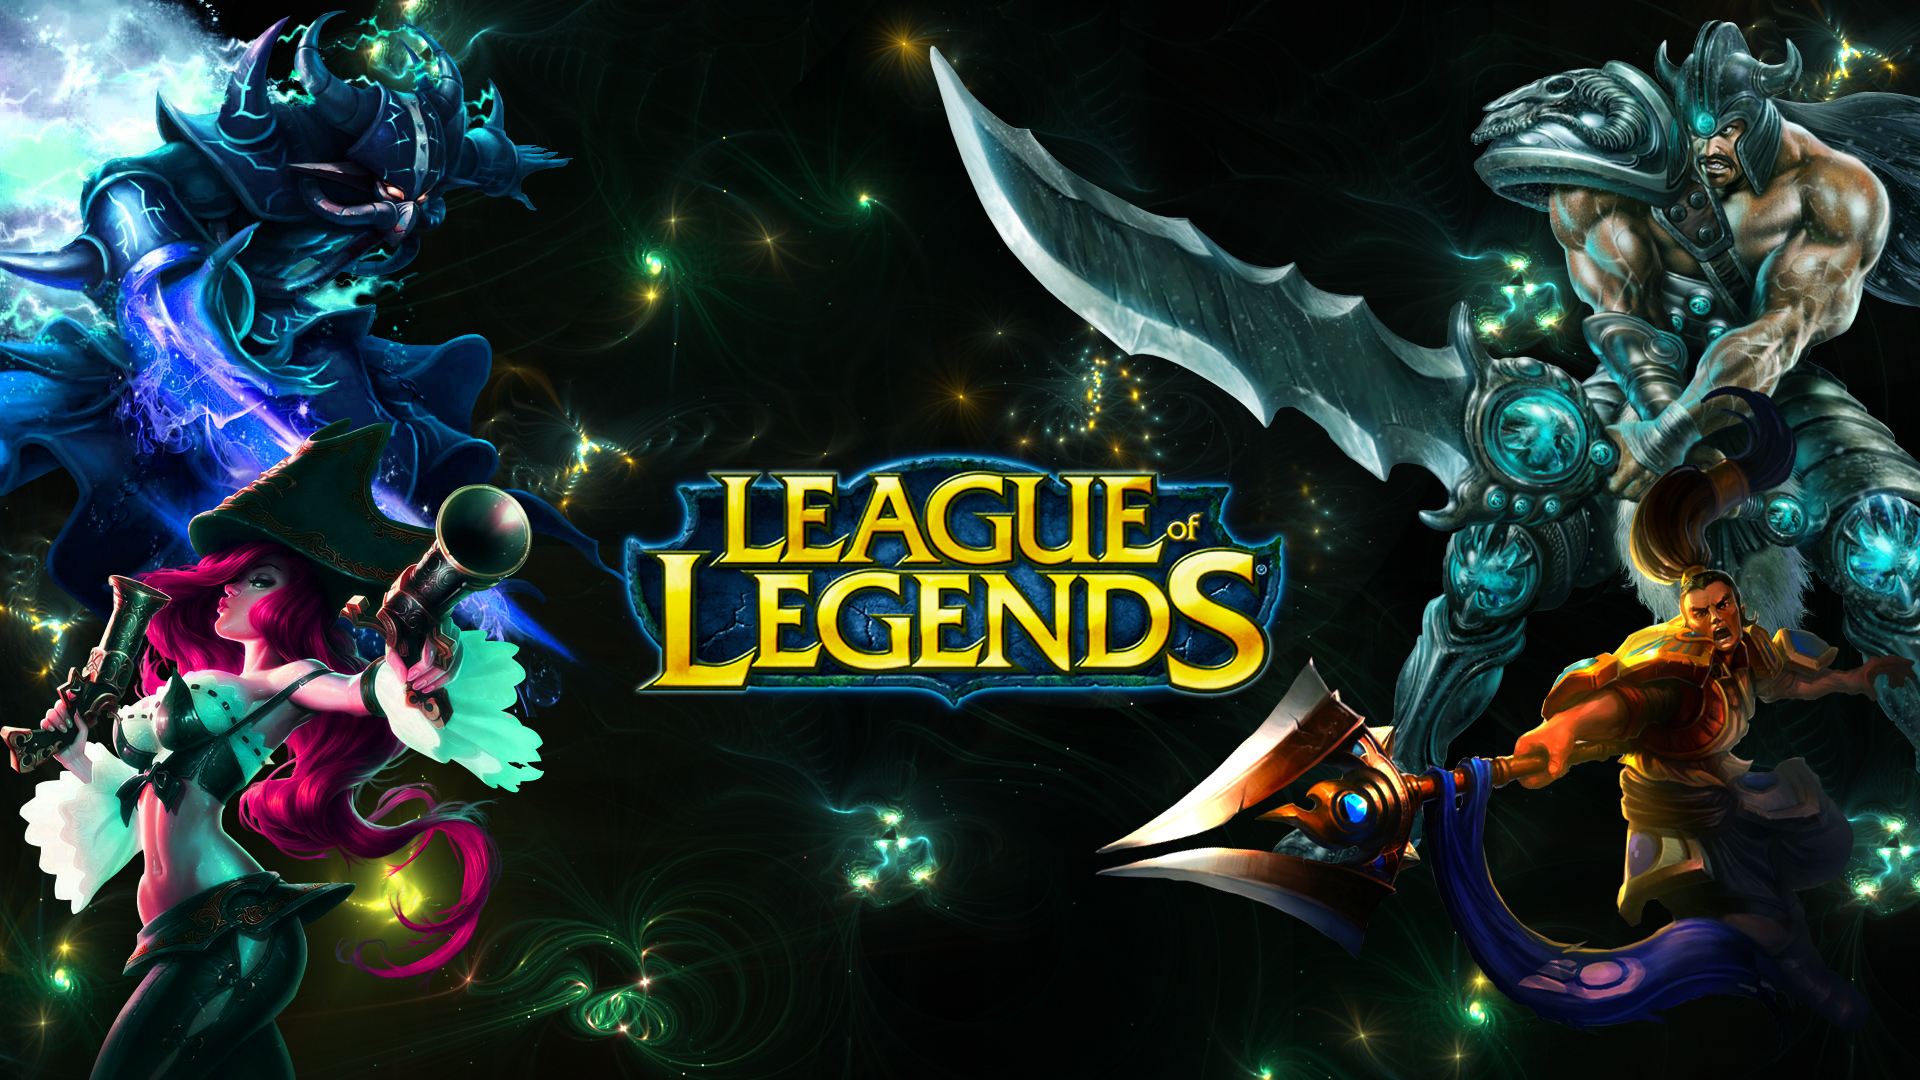 League of Legends wallpaper 67, League of Legends is a multiplayer online b...